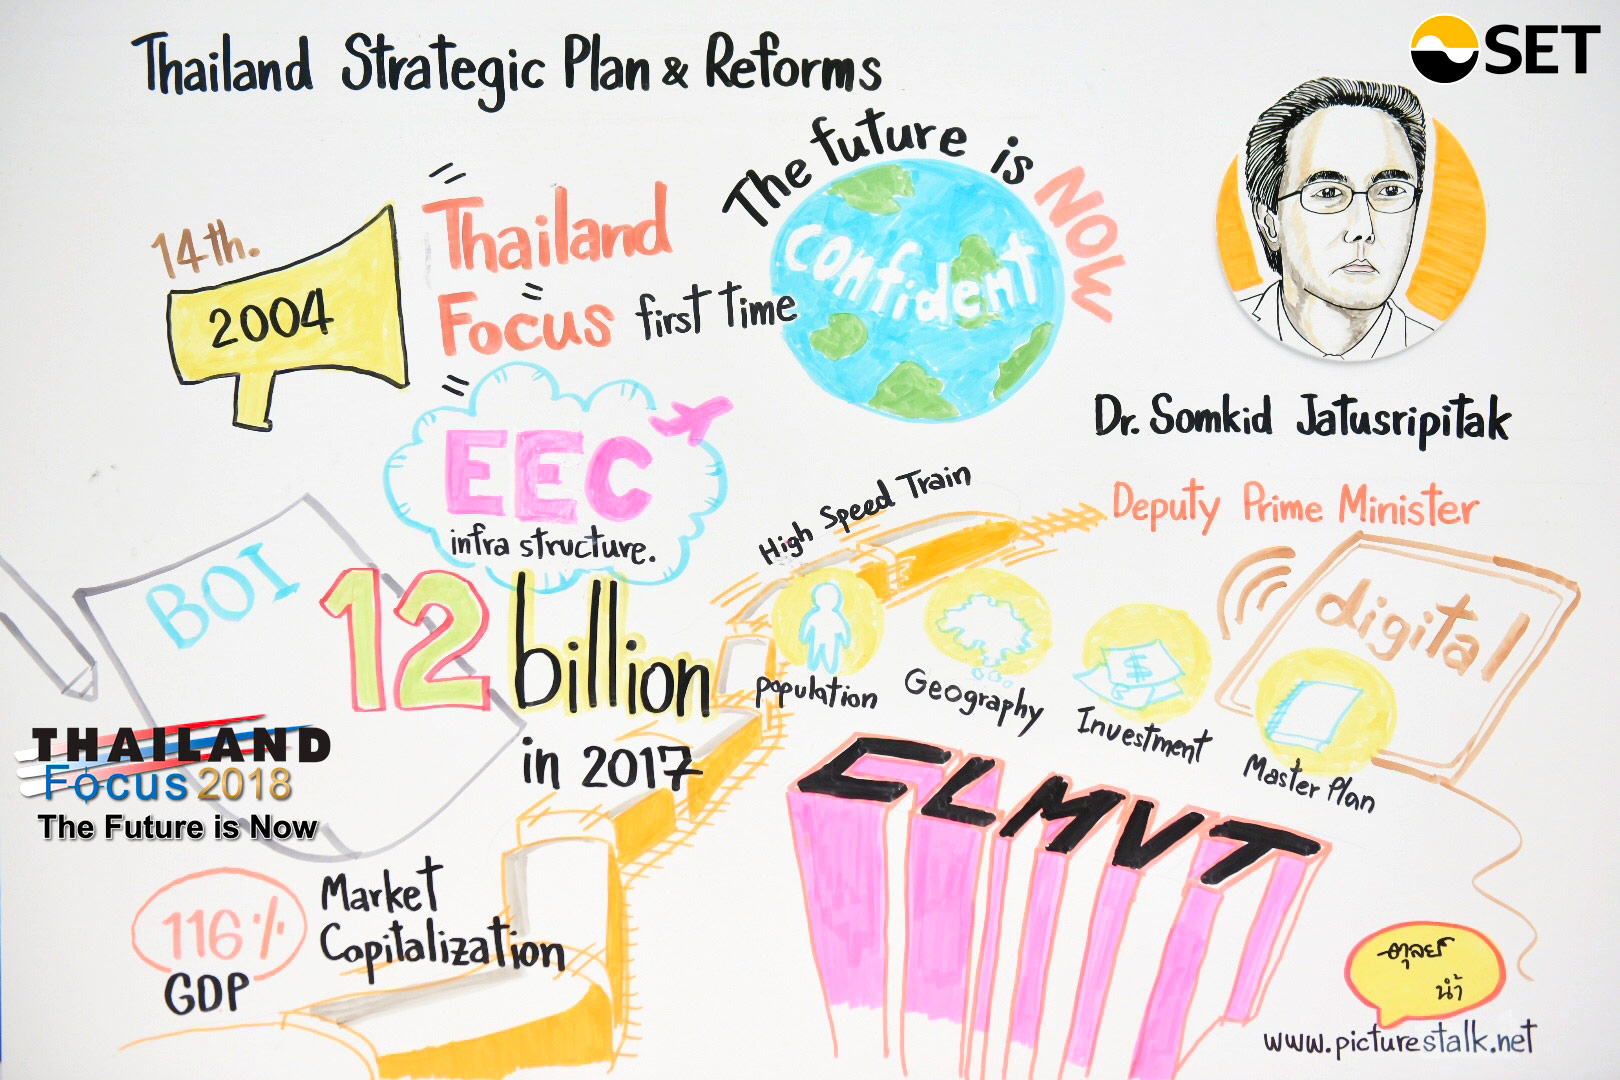 Thailand Focus 2018 - Opening Speech: Thailand Strategic Plan and Reforms - Dr. Somkid Jatusripitak